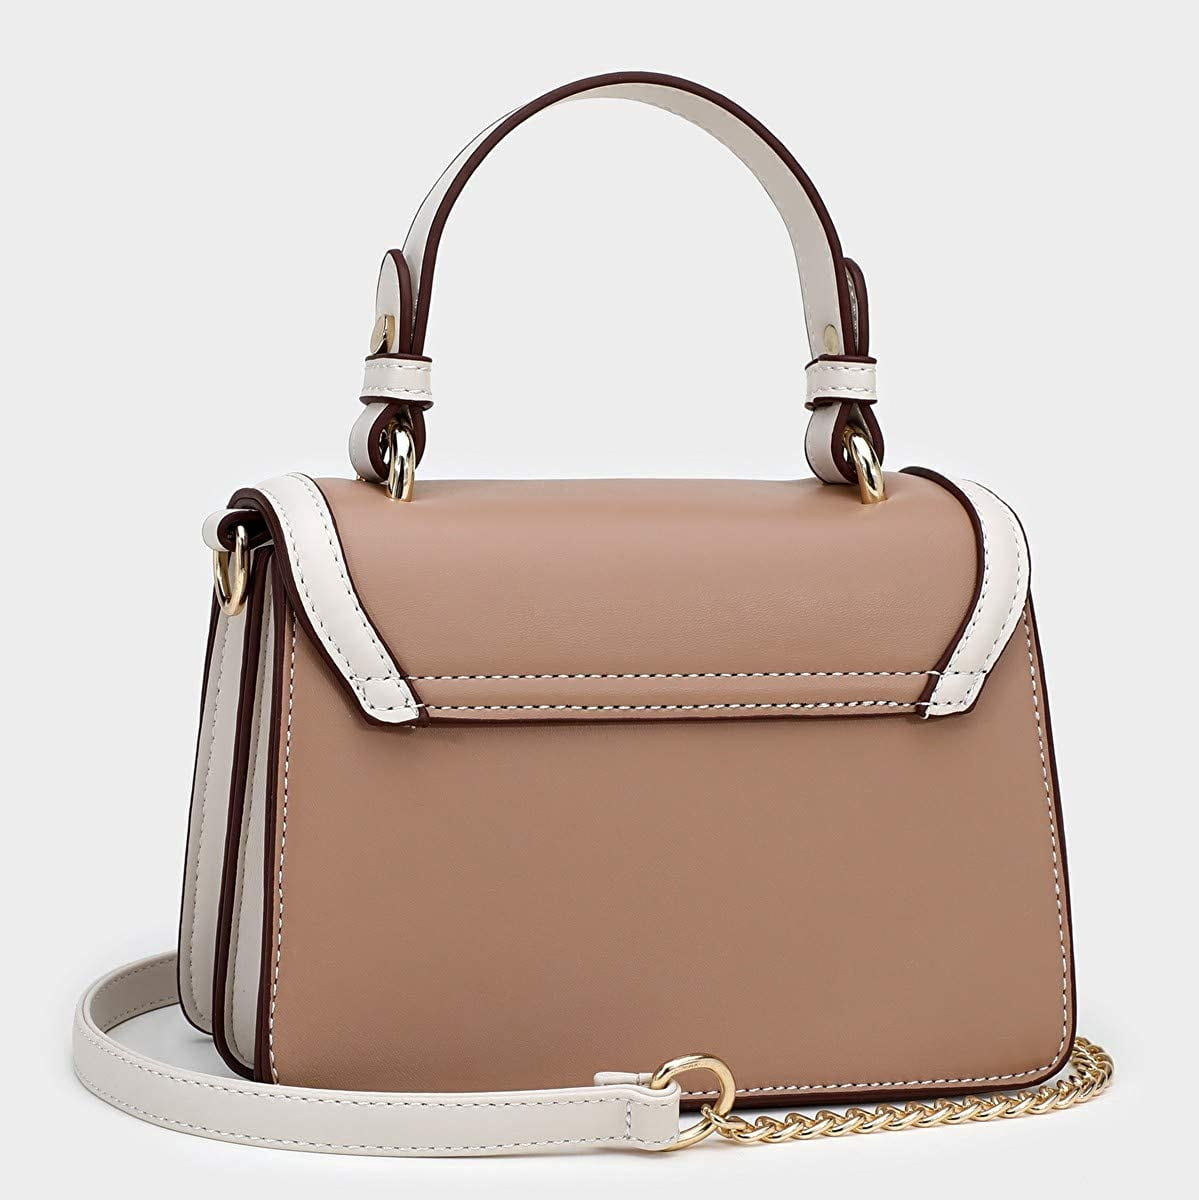 Ridiculously Cute Miniature Designer Bags | Tiny purses, Bags, Mini handbags